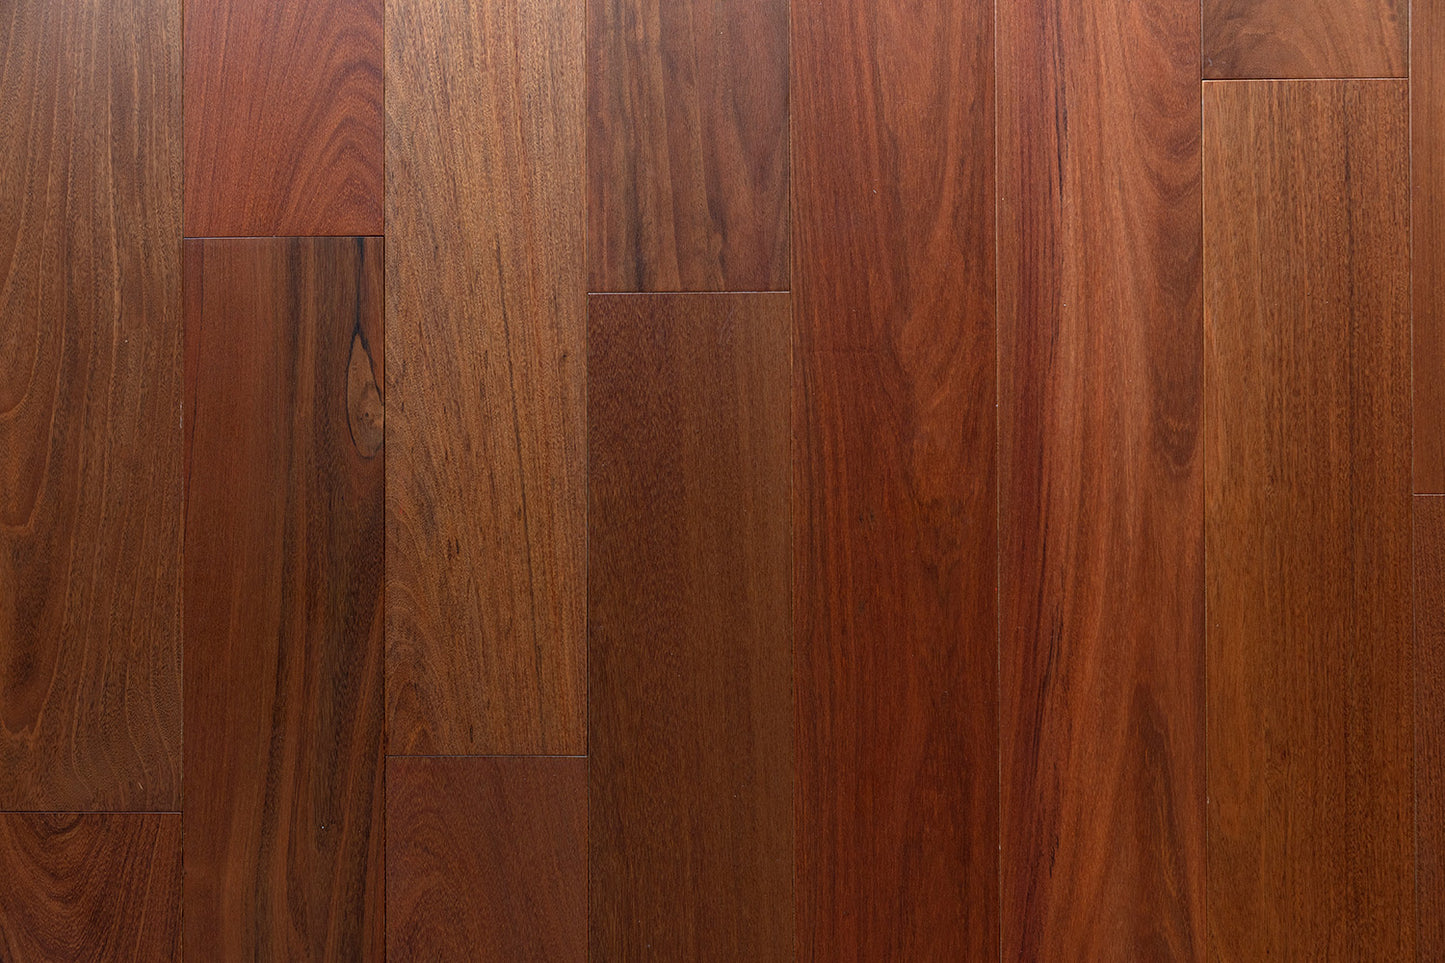 Ipe (Brazilian Walnut) Solid Flooring 4″ Unfinished, $6.24/sqft